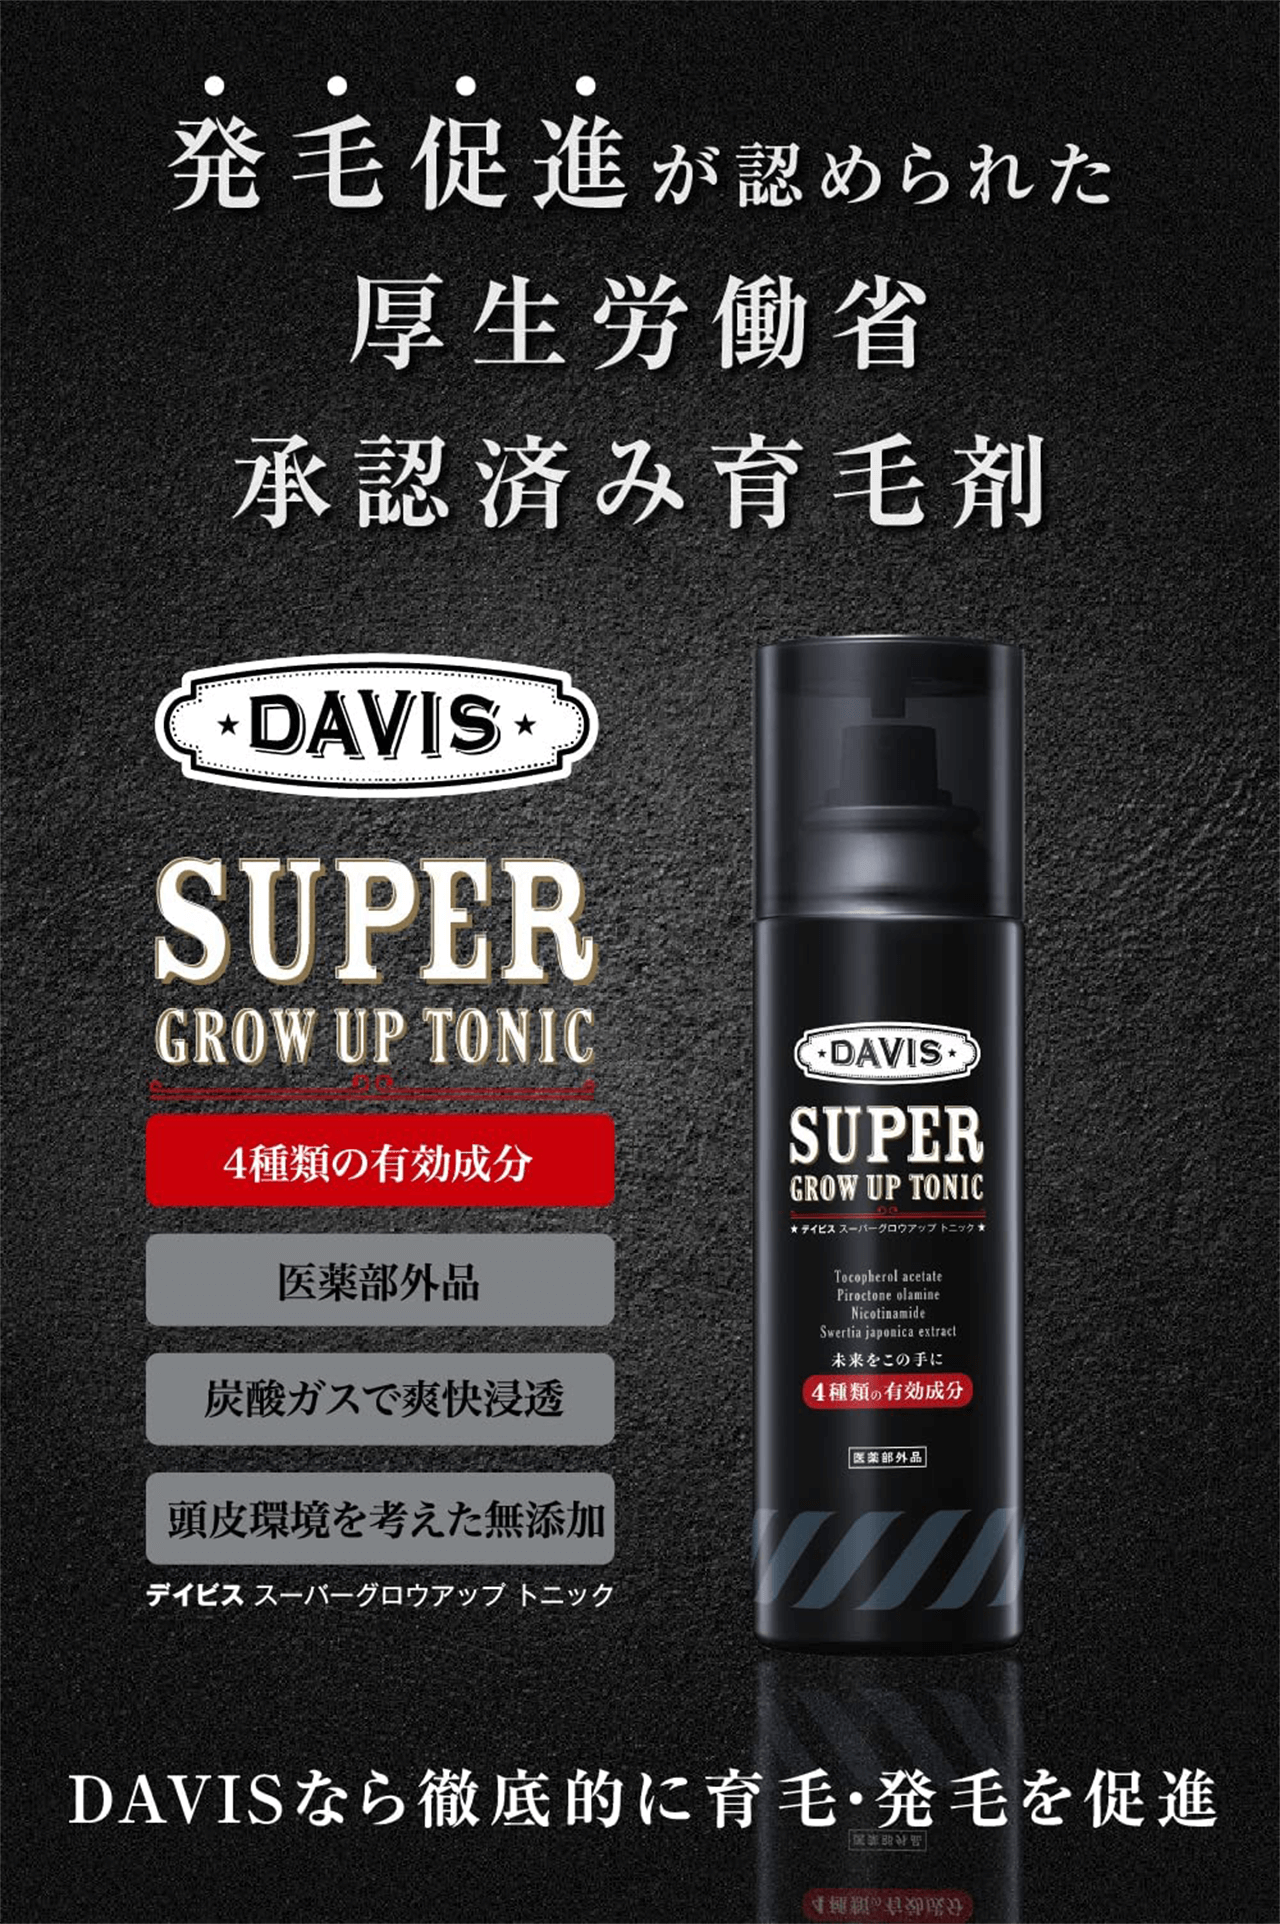 ёiF߂ꂽJȏFς݈э DAVIS SUPER GROU UP TONIC